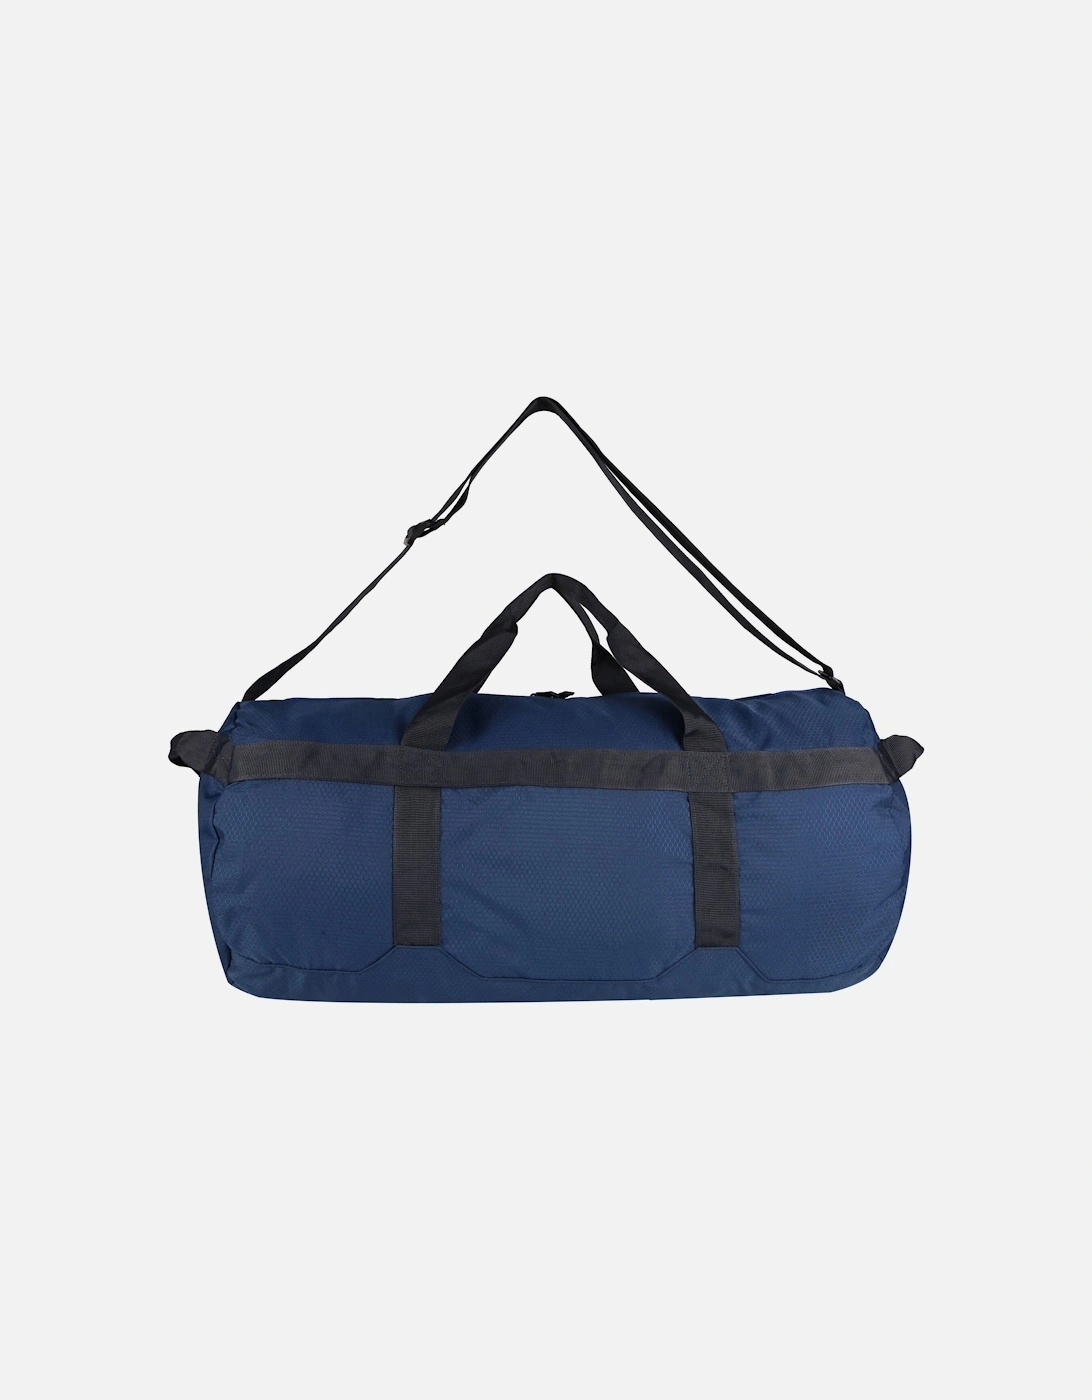 Packaway Duffle Bag